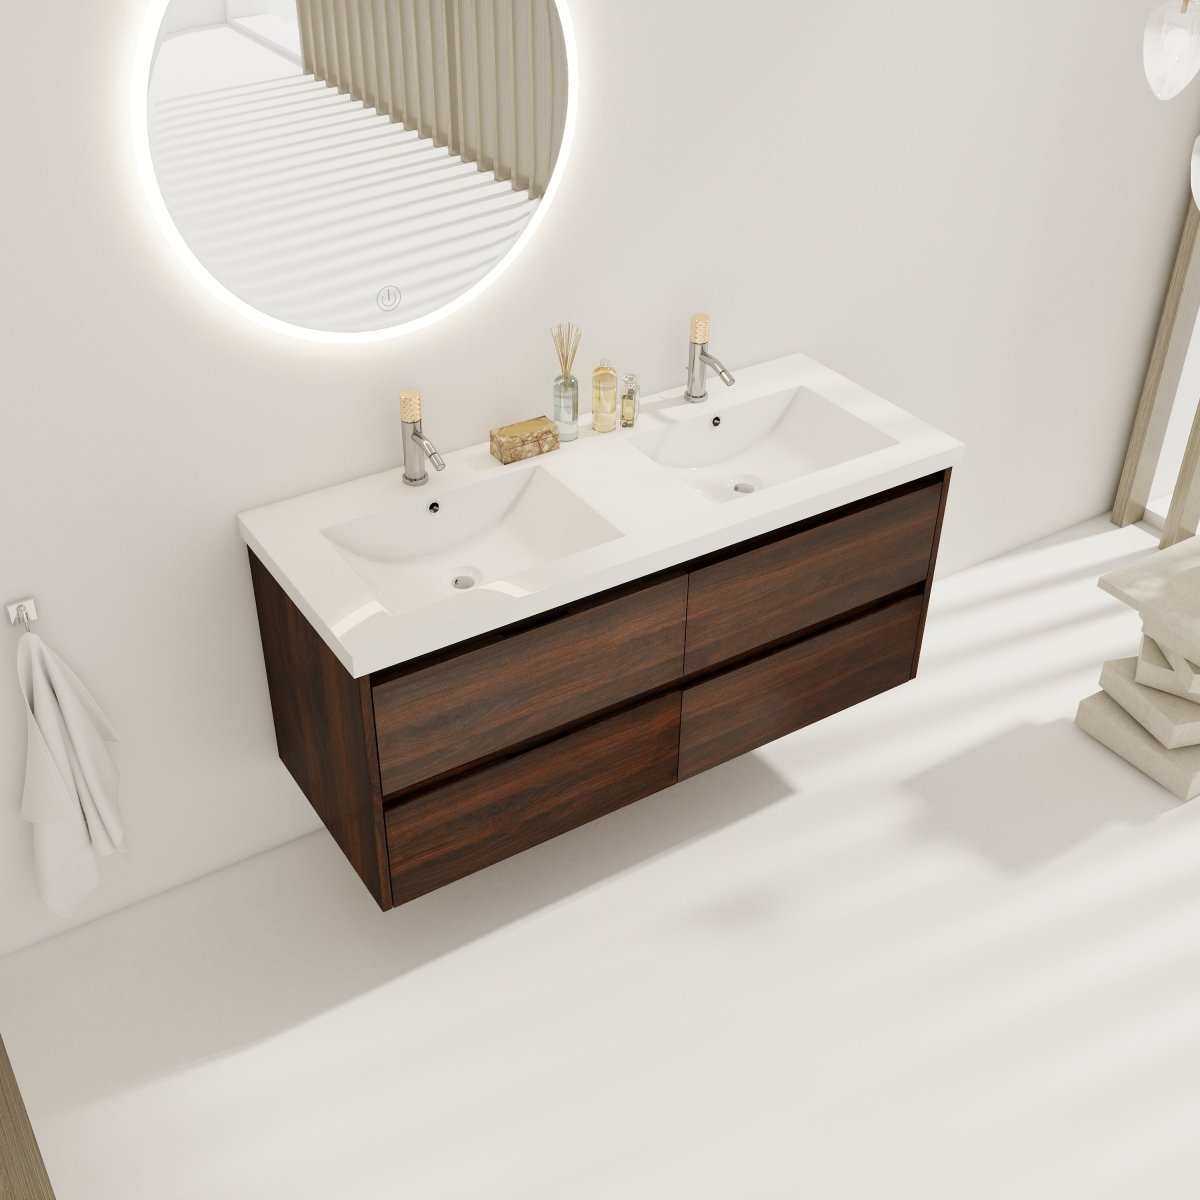 ExBrite 48 Inch Bathroom Vanity With Dual Sink, Resin Sink, 4 Soft Close Drawers, 48x18